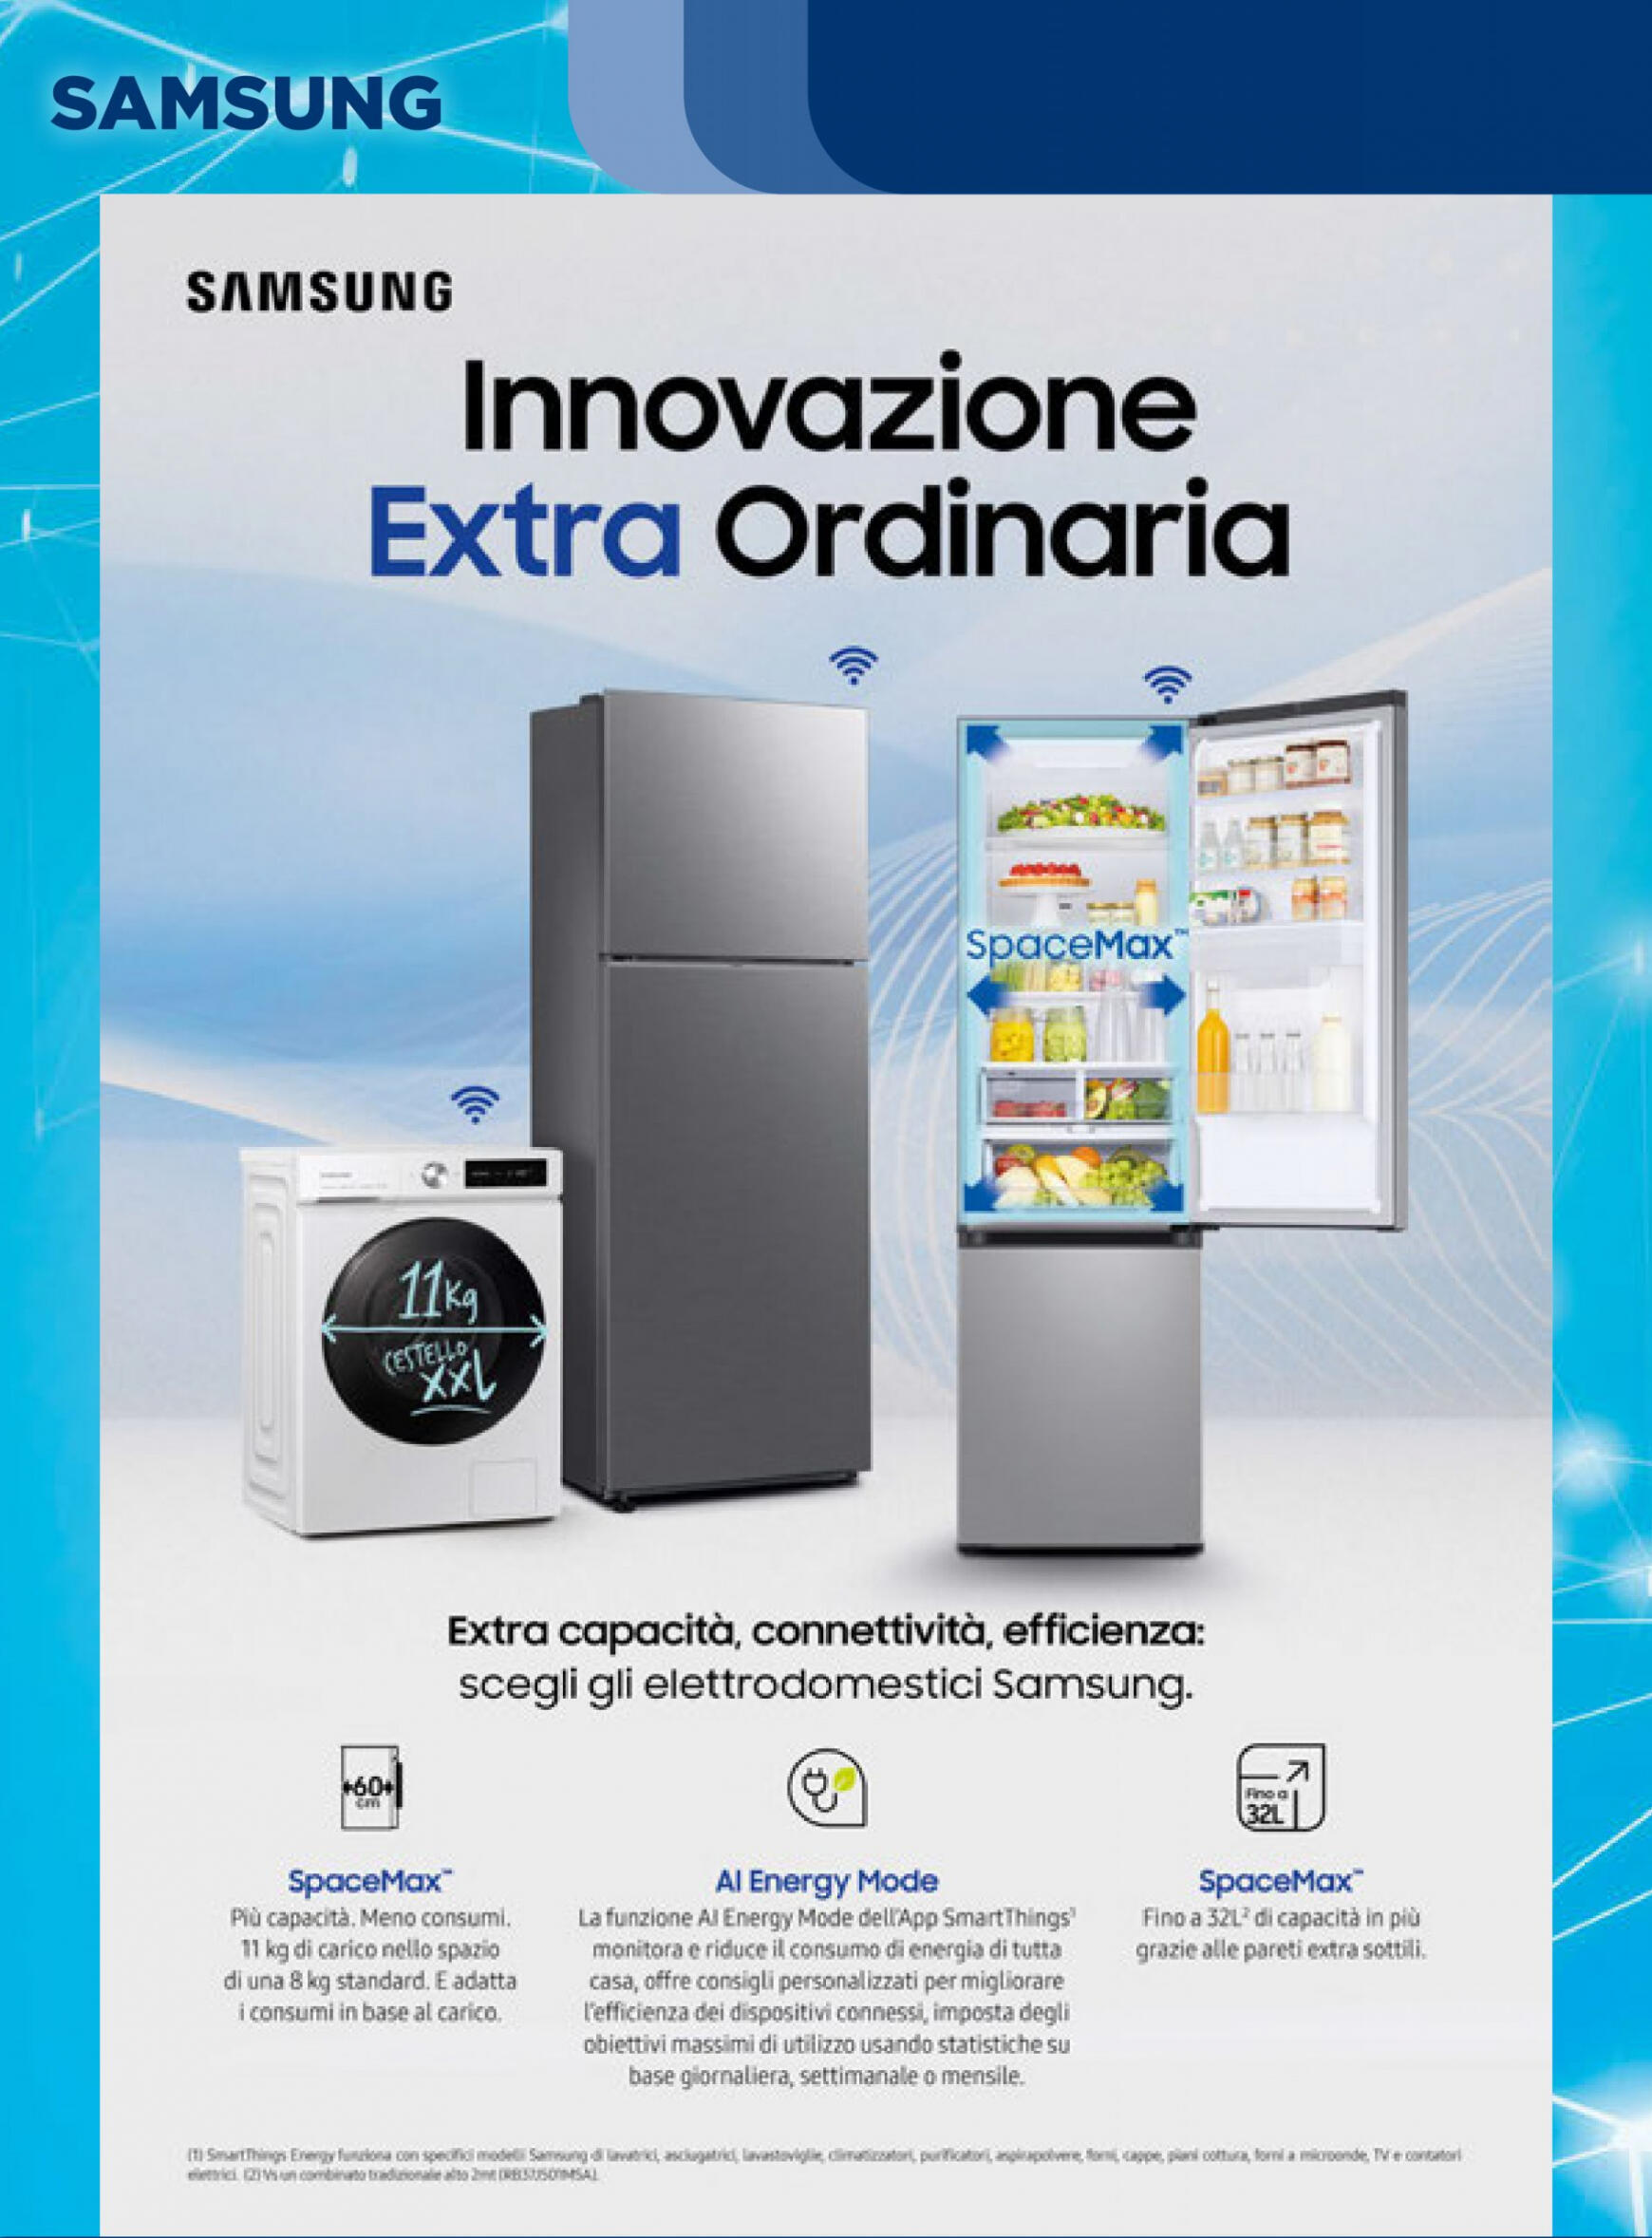 esselunga - Nuovo volantino Esselunga - Speciale Elettrodomestici 01.04. - 31.07. - page: 4